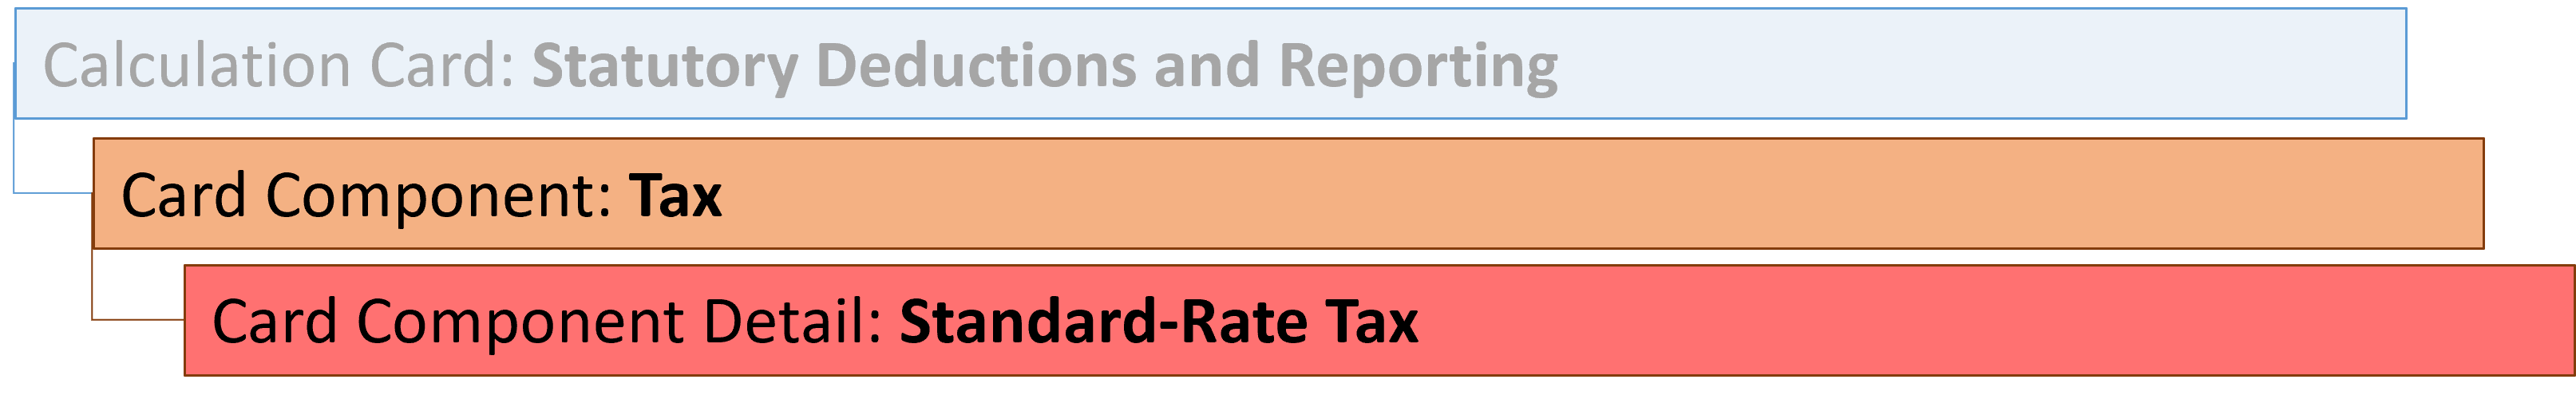 netherlands statutory deductions tax component